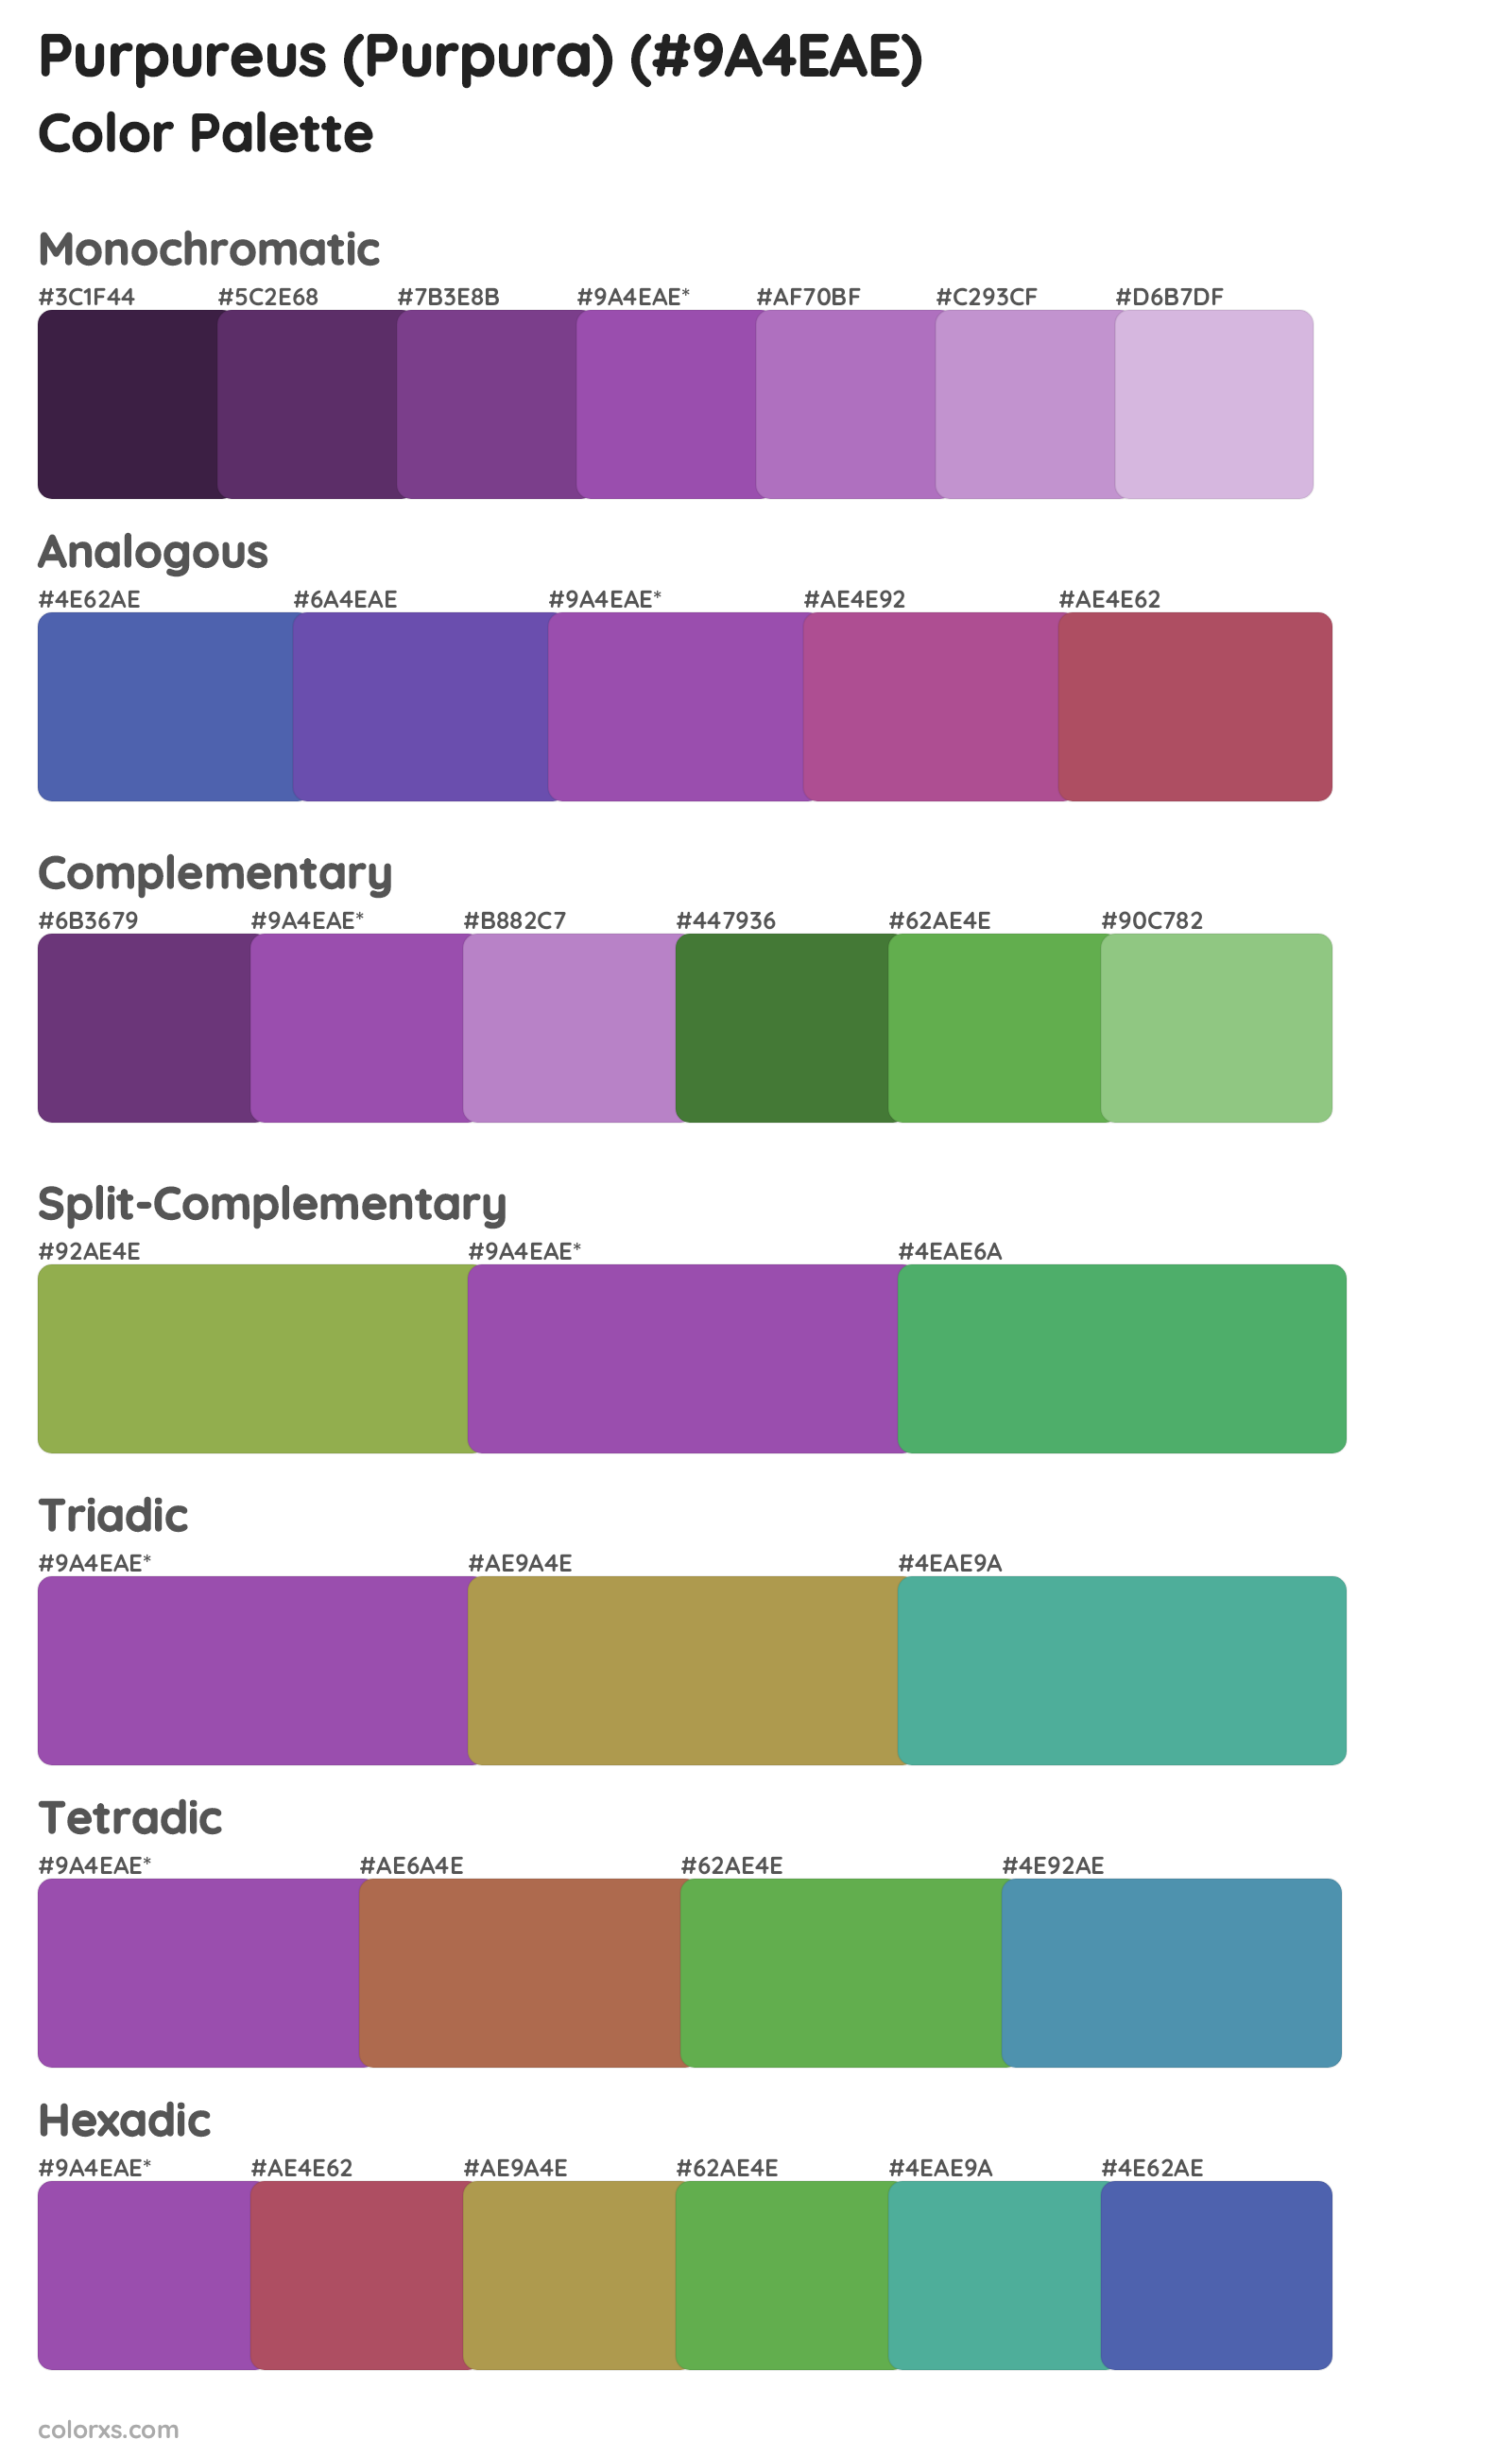 Purpureus (Purpura) Color Scheme Palettes